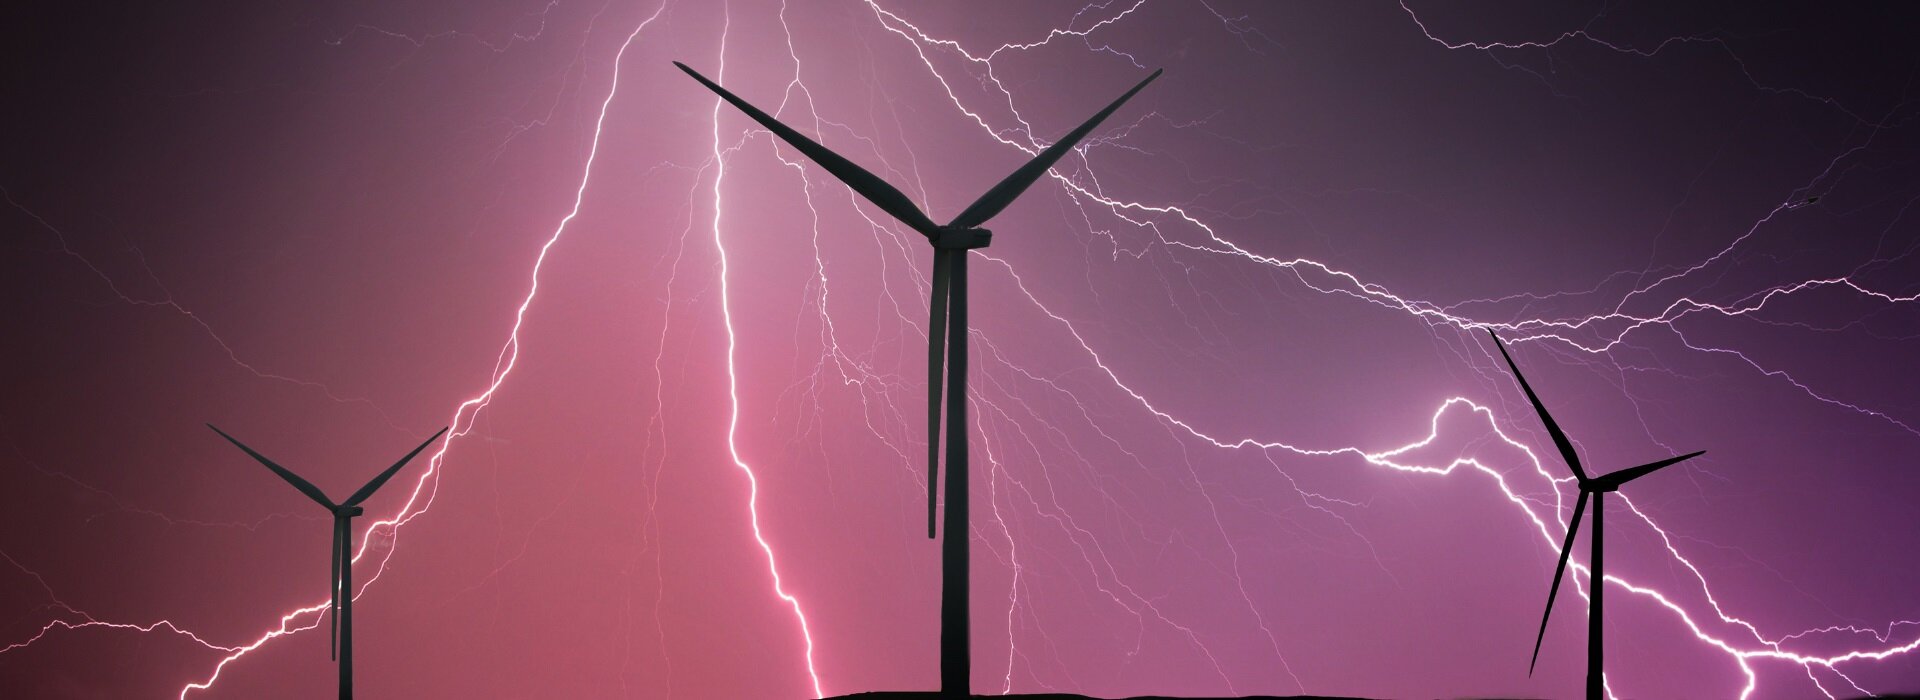 Multi-megawatt plants struck by lightning more than ten times a year